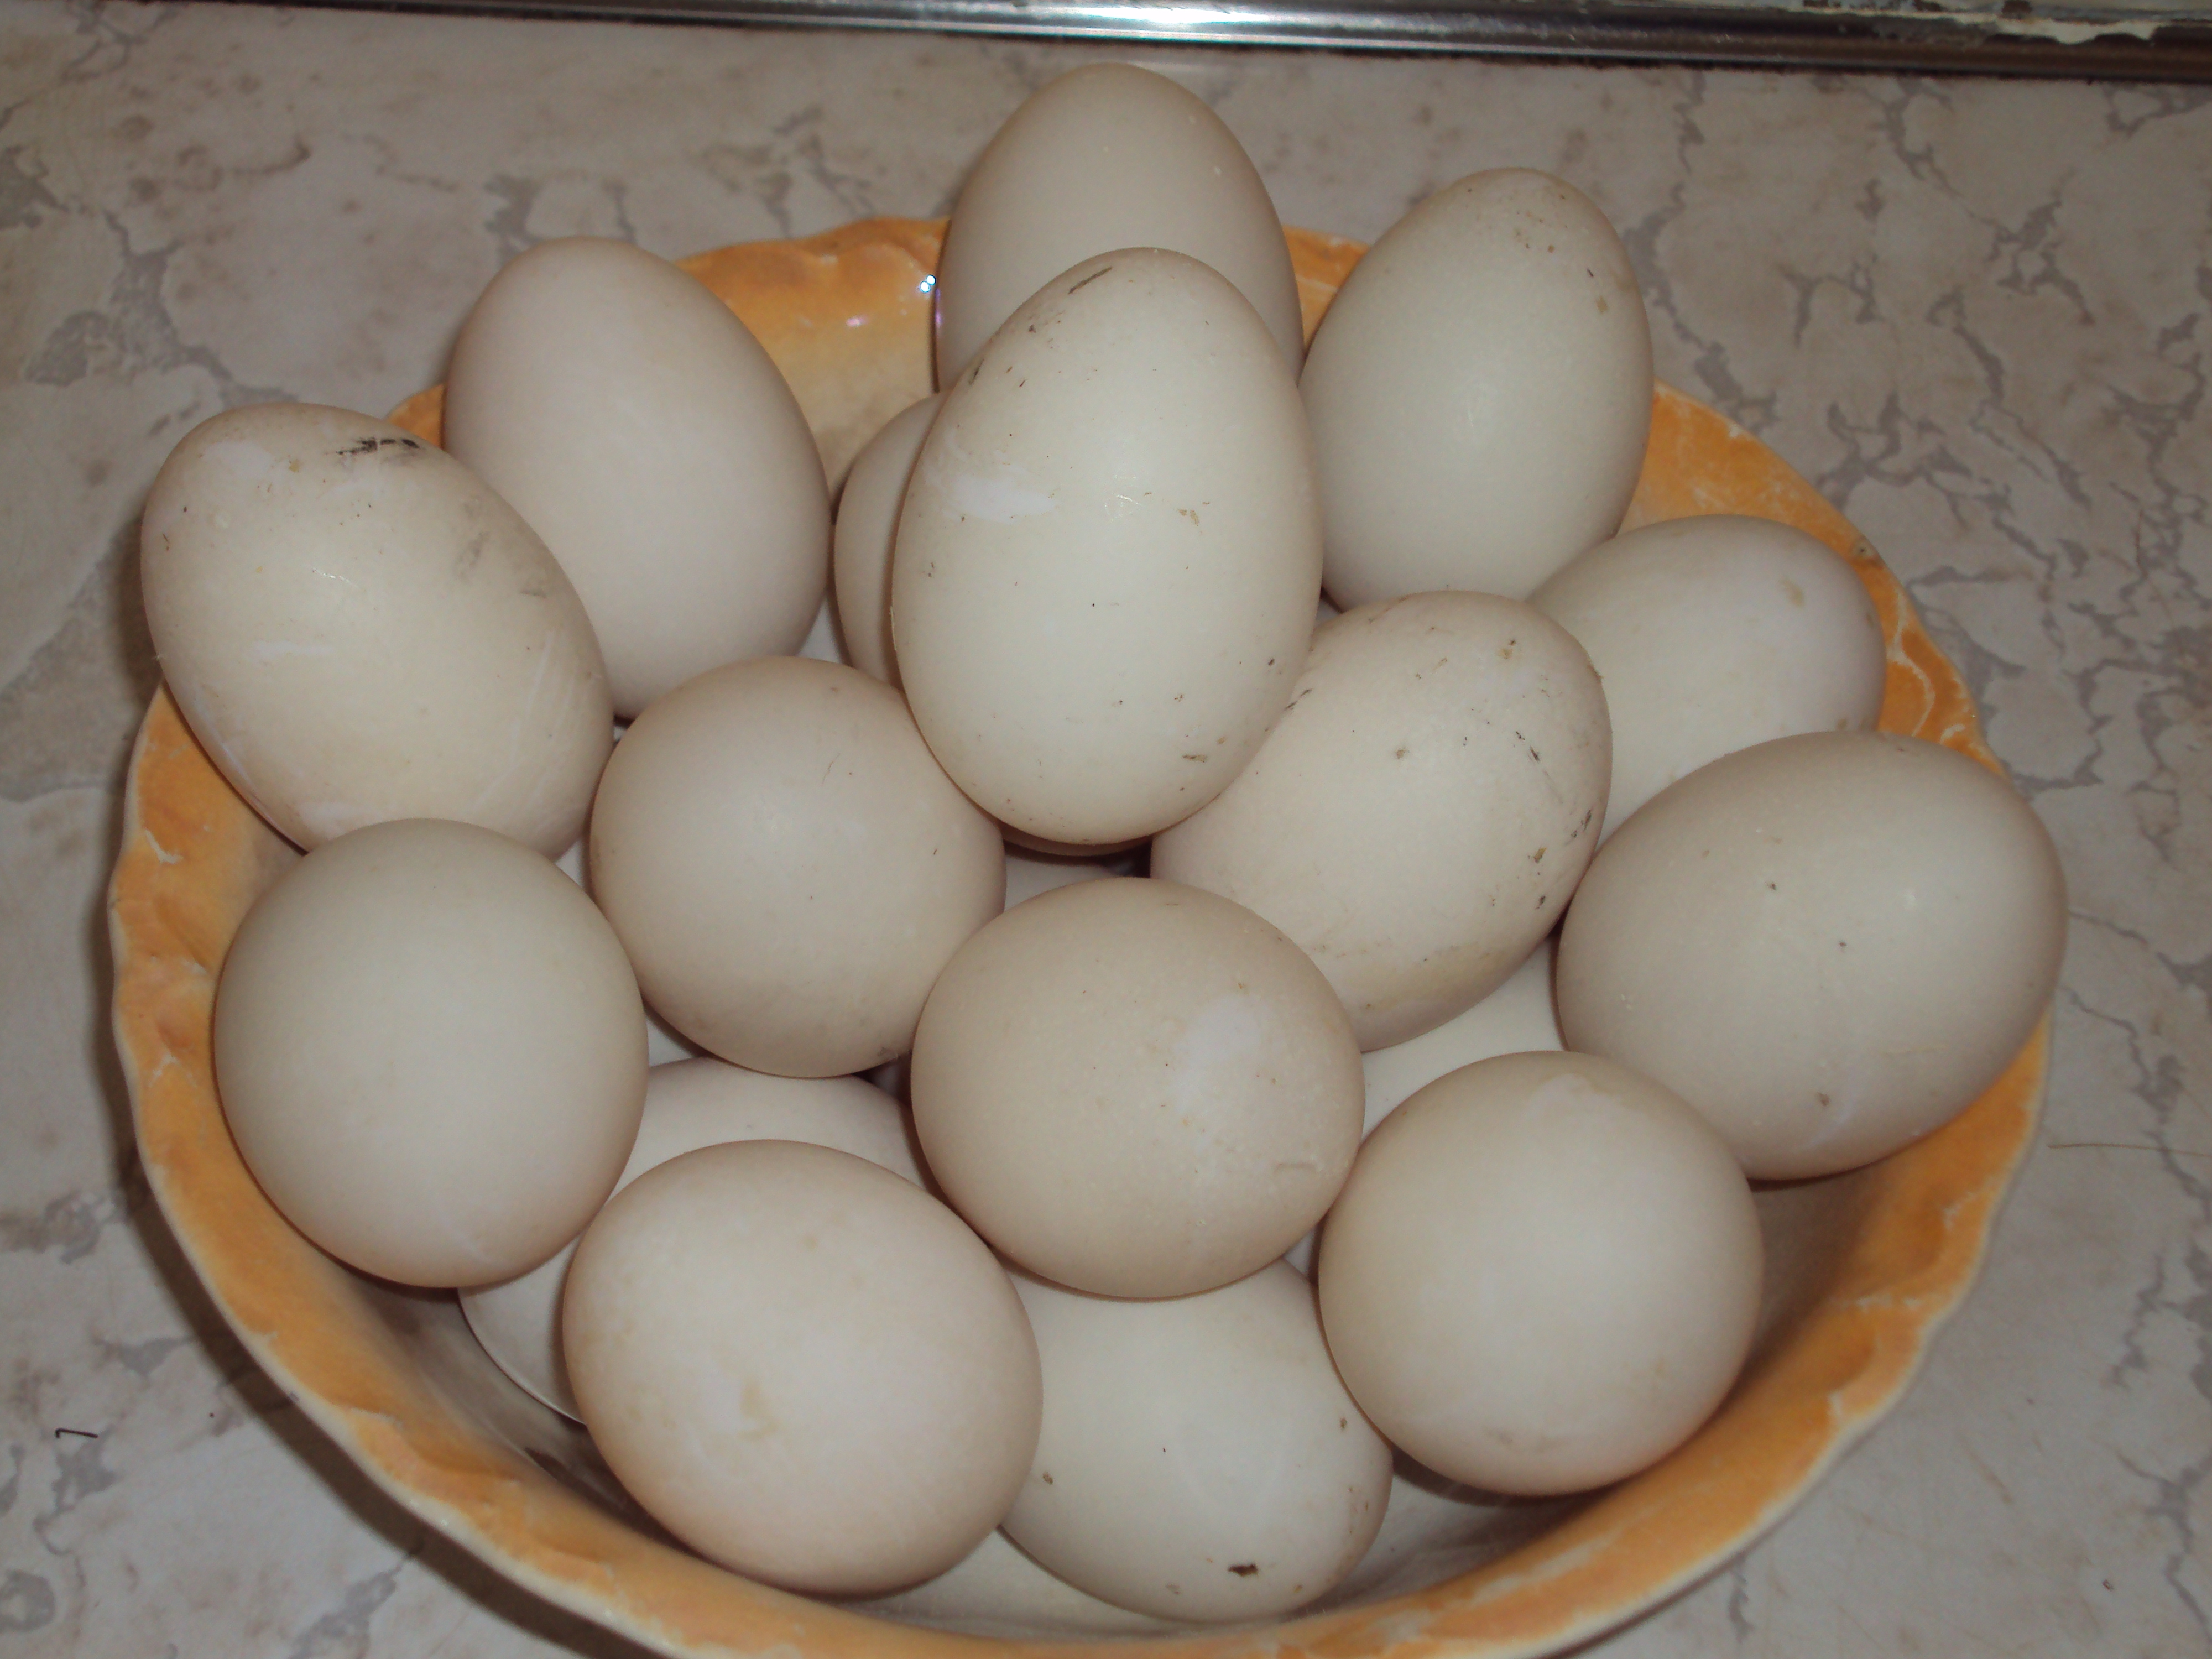 Как выглядят утиные яйца фото